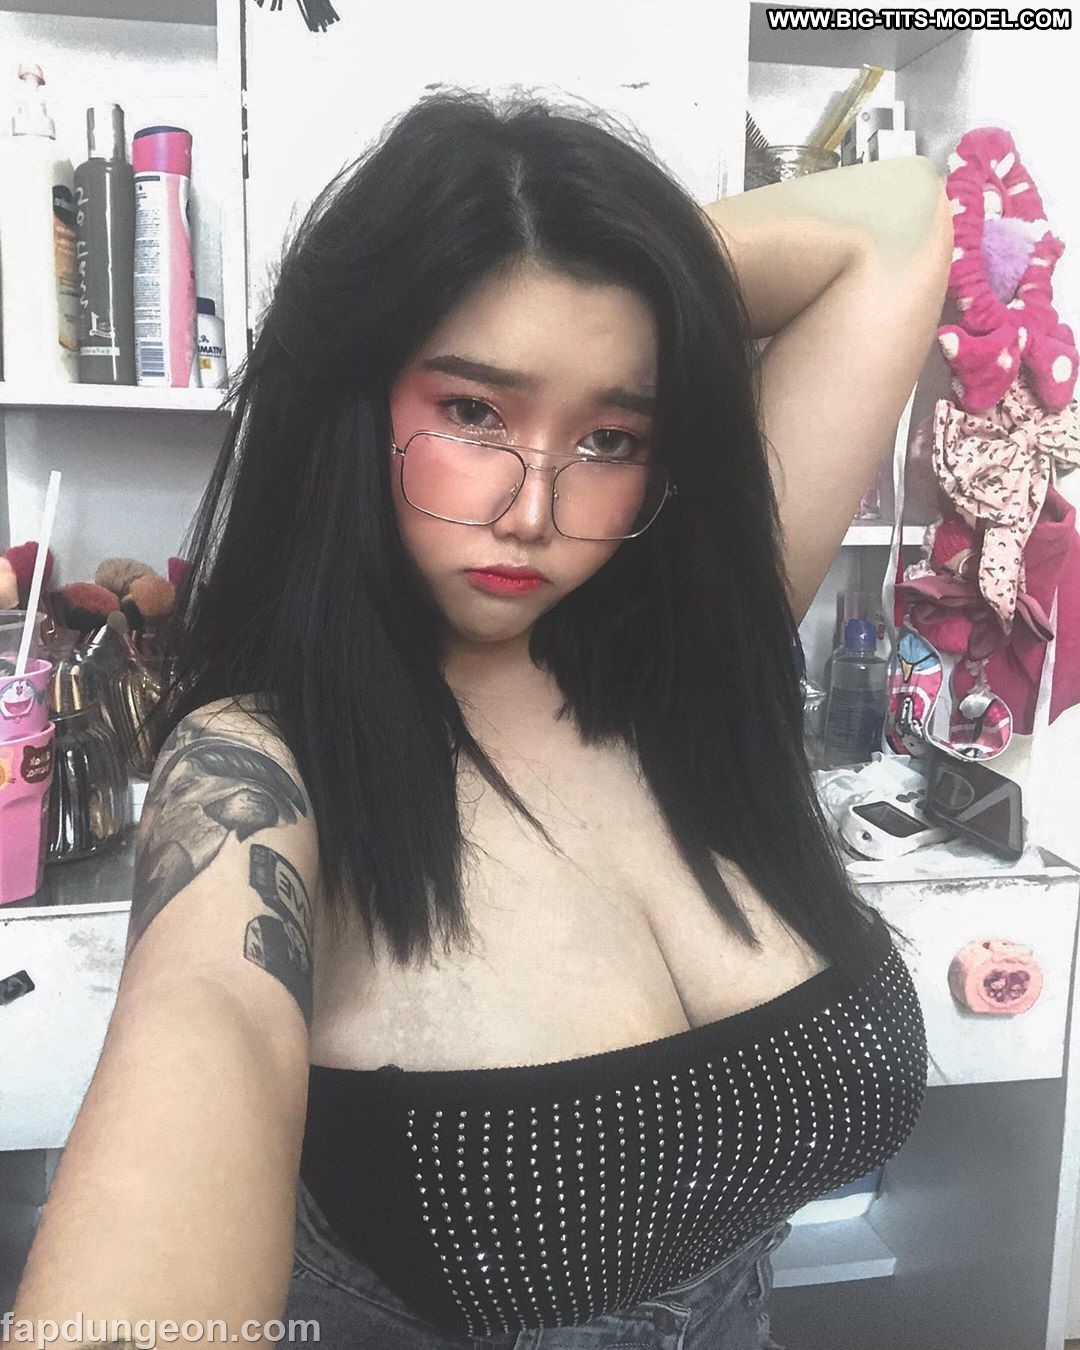 Give Give Photos Big Thai Girl Manyvids Girl Patreon Boobs Tits